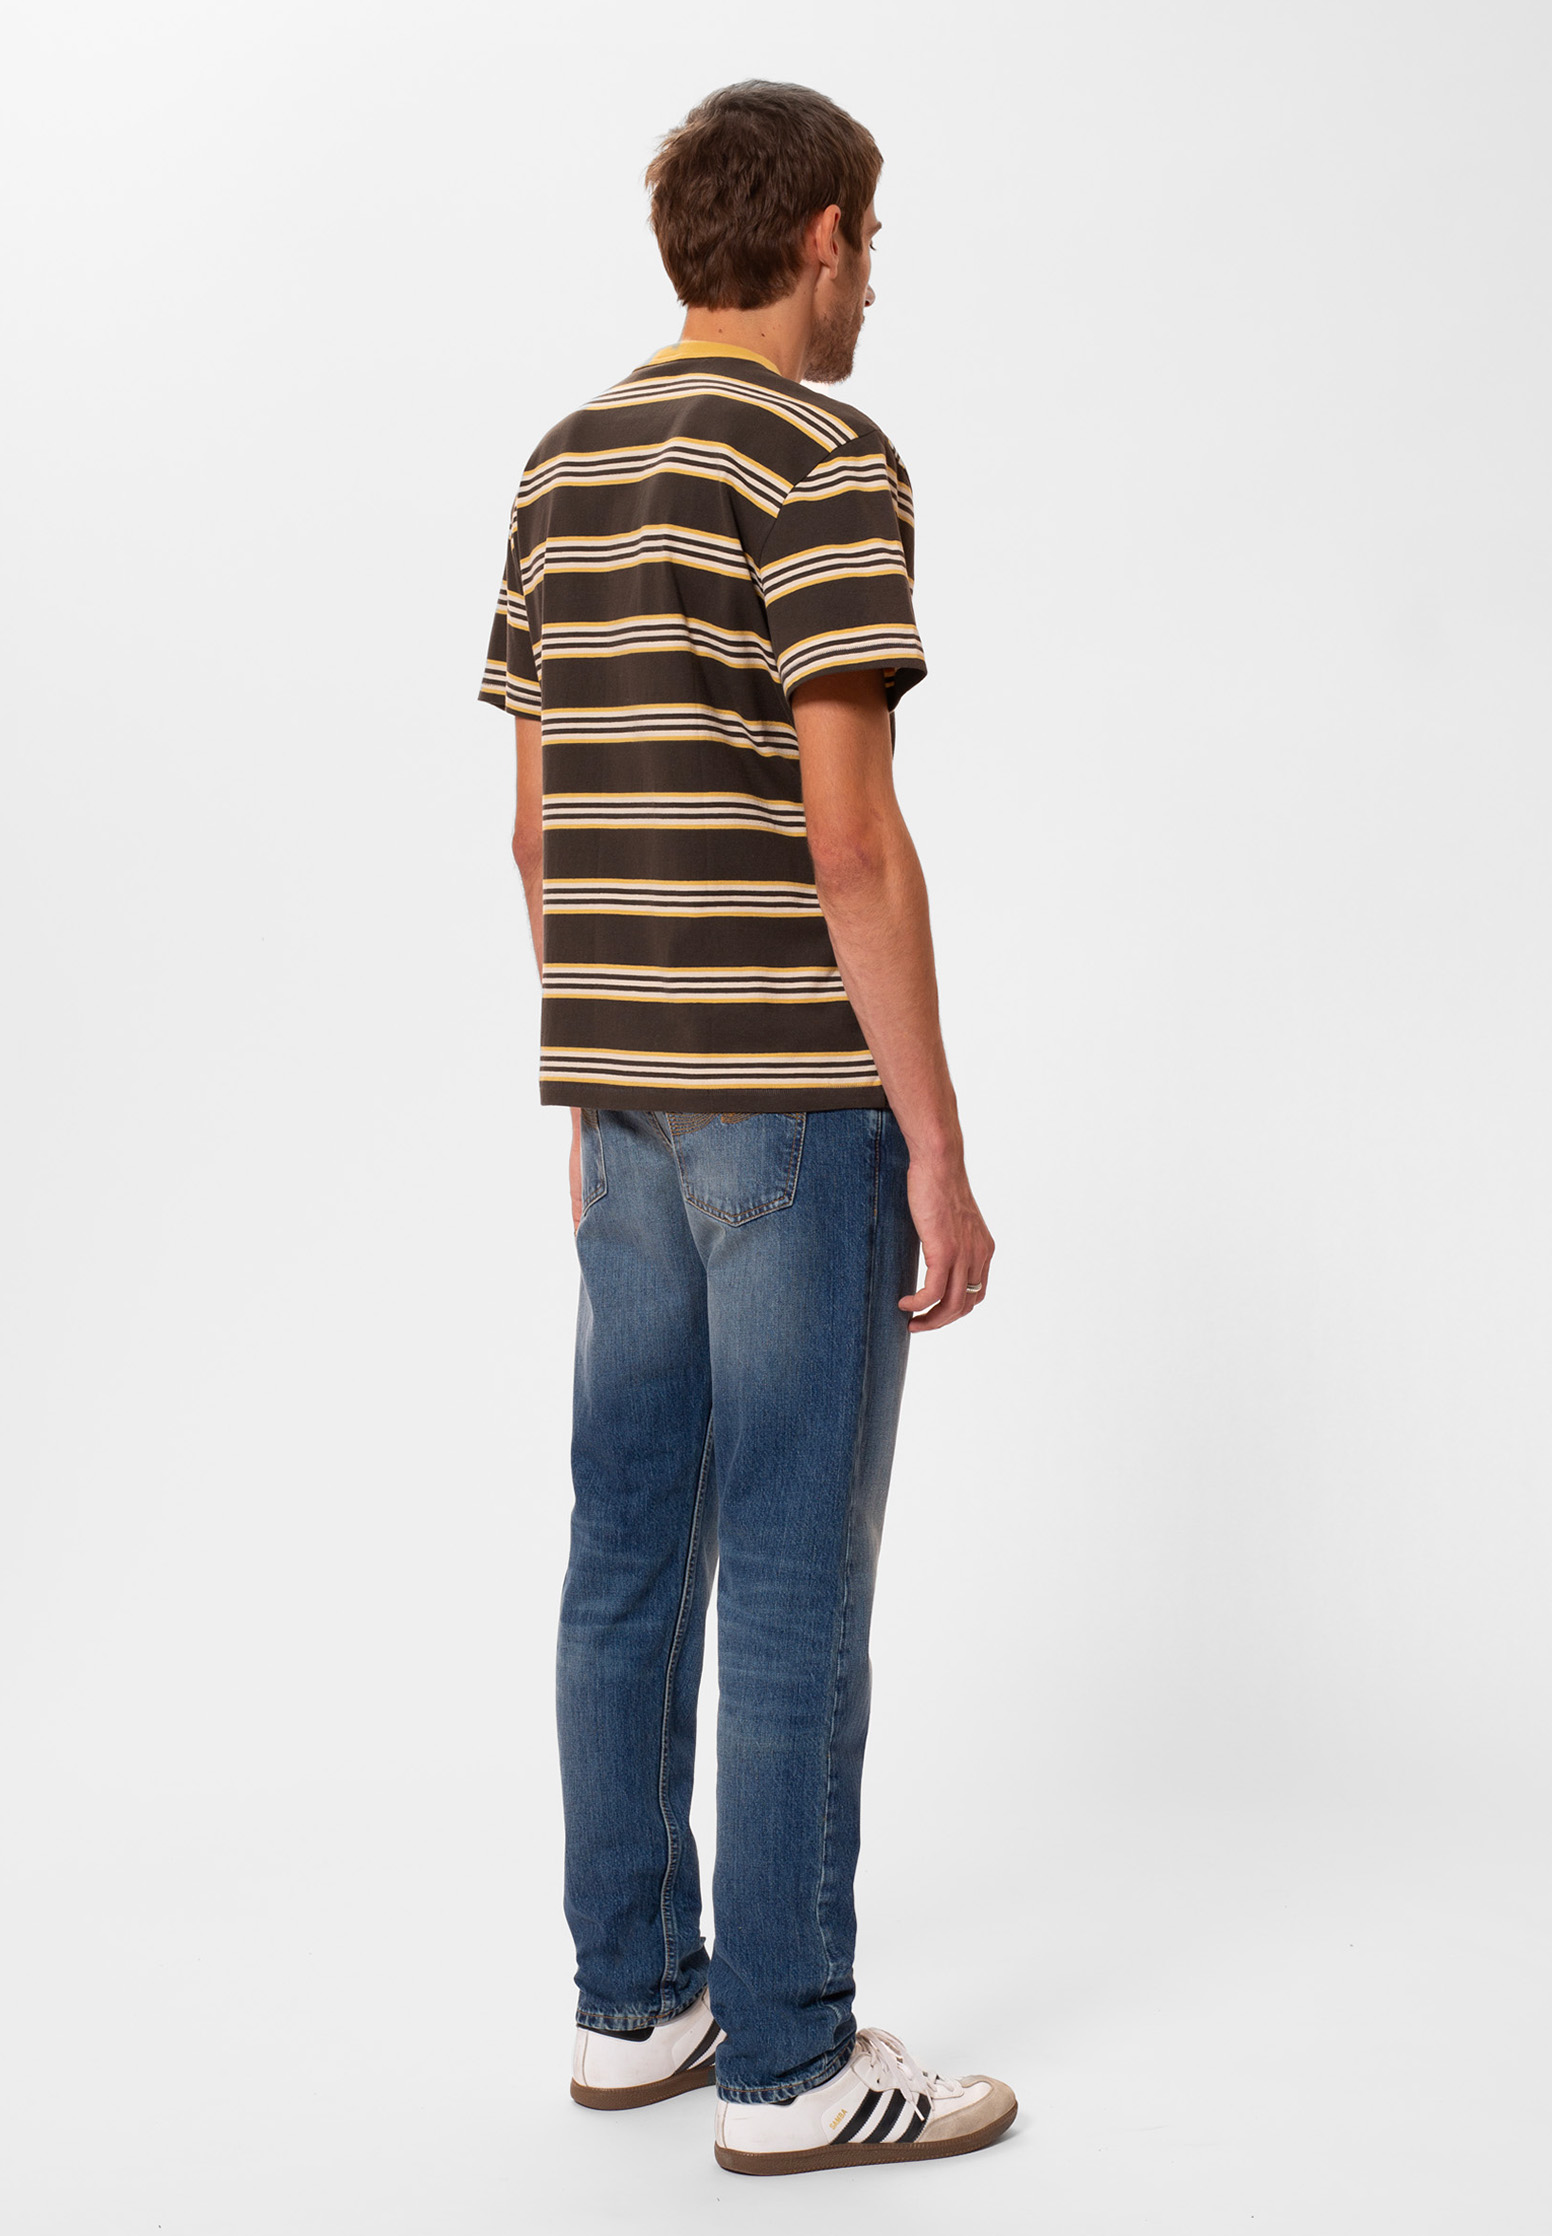 Hosen, Person, Stehend, T-shirt, Jeanshose